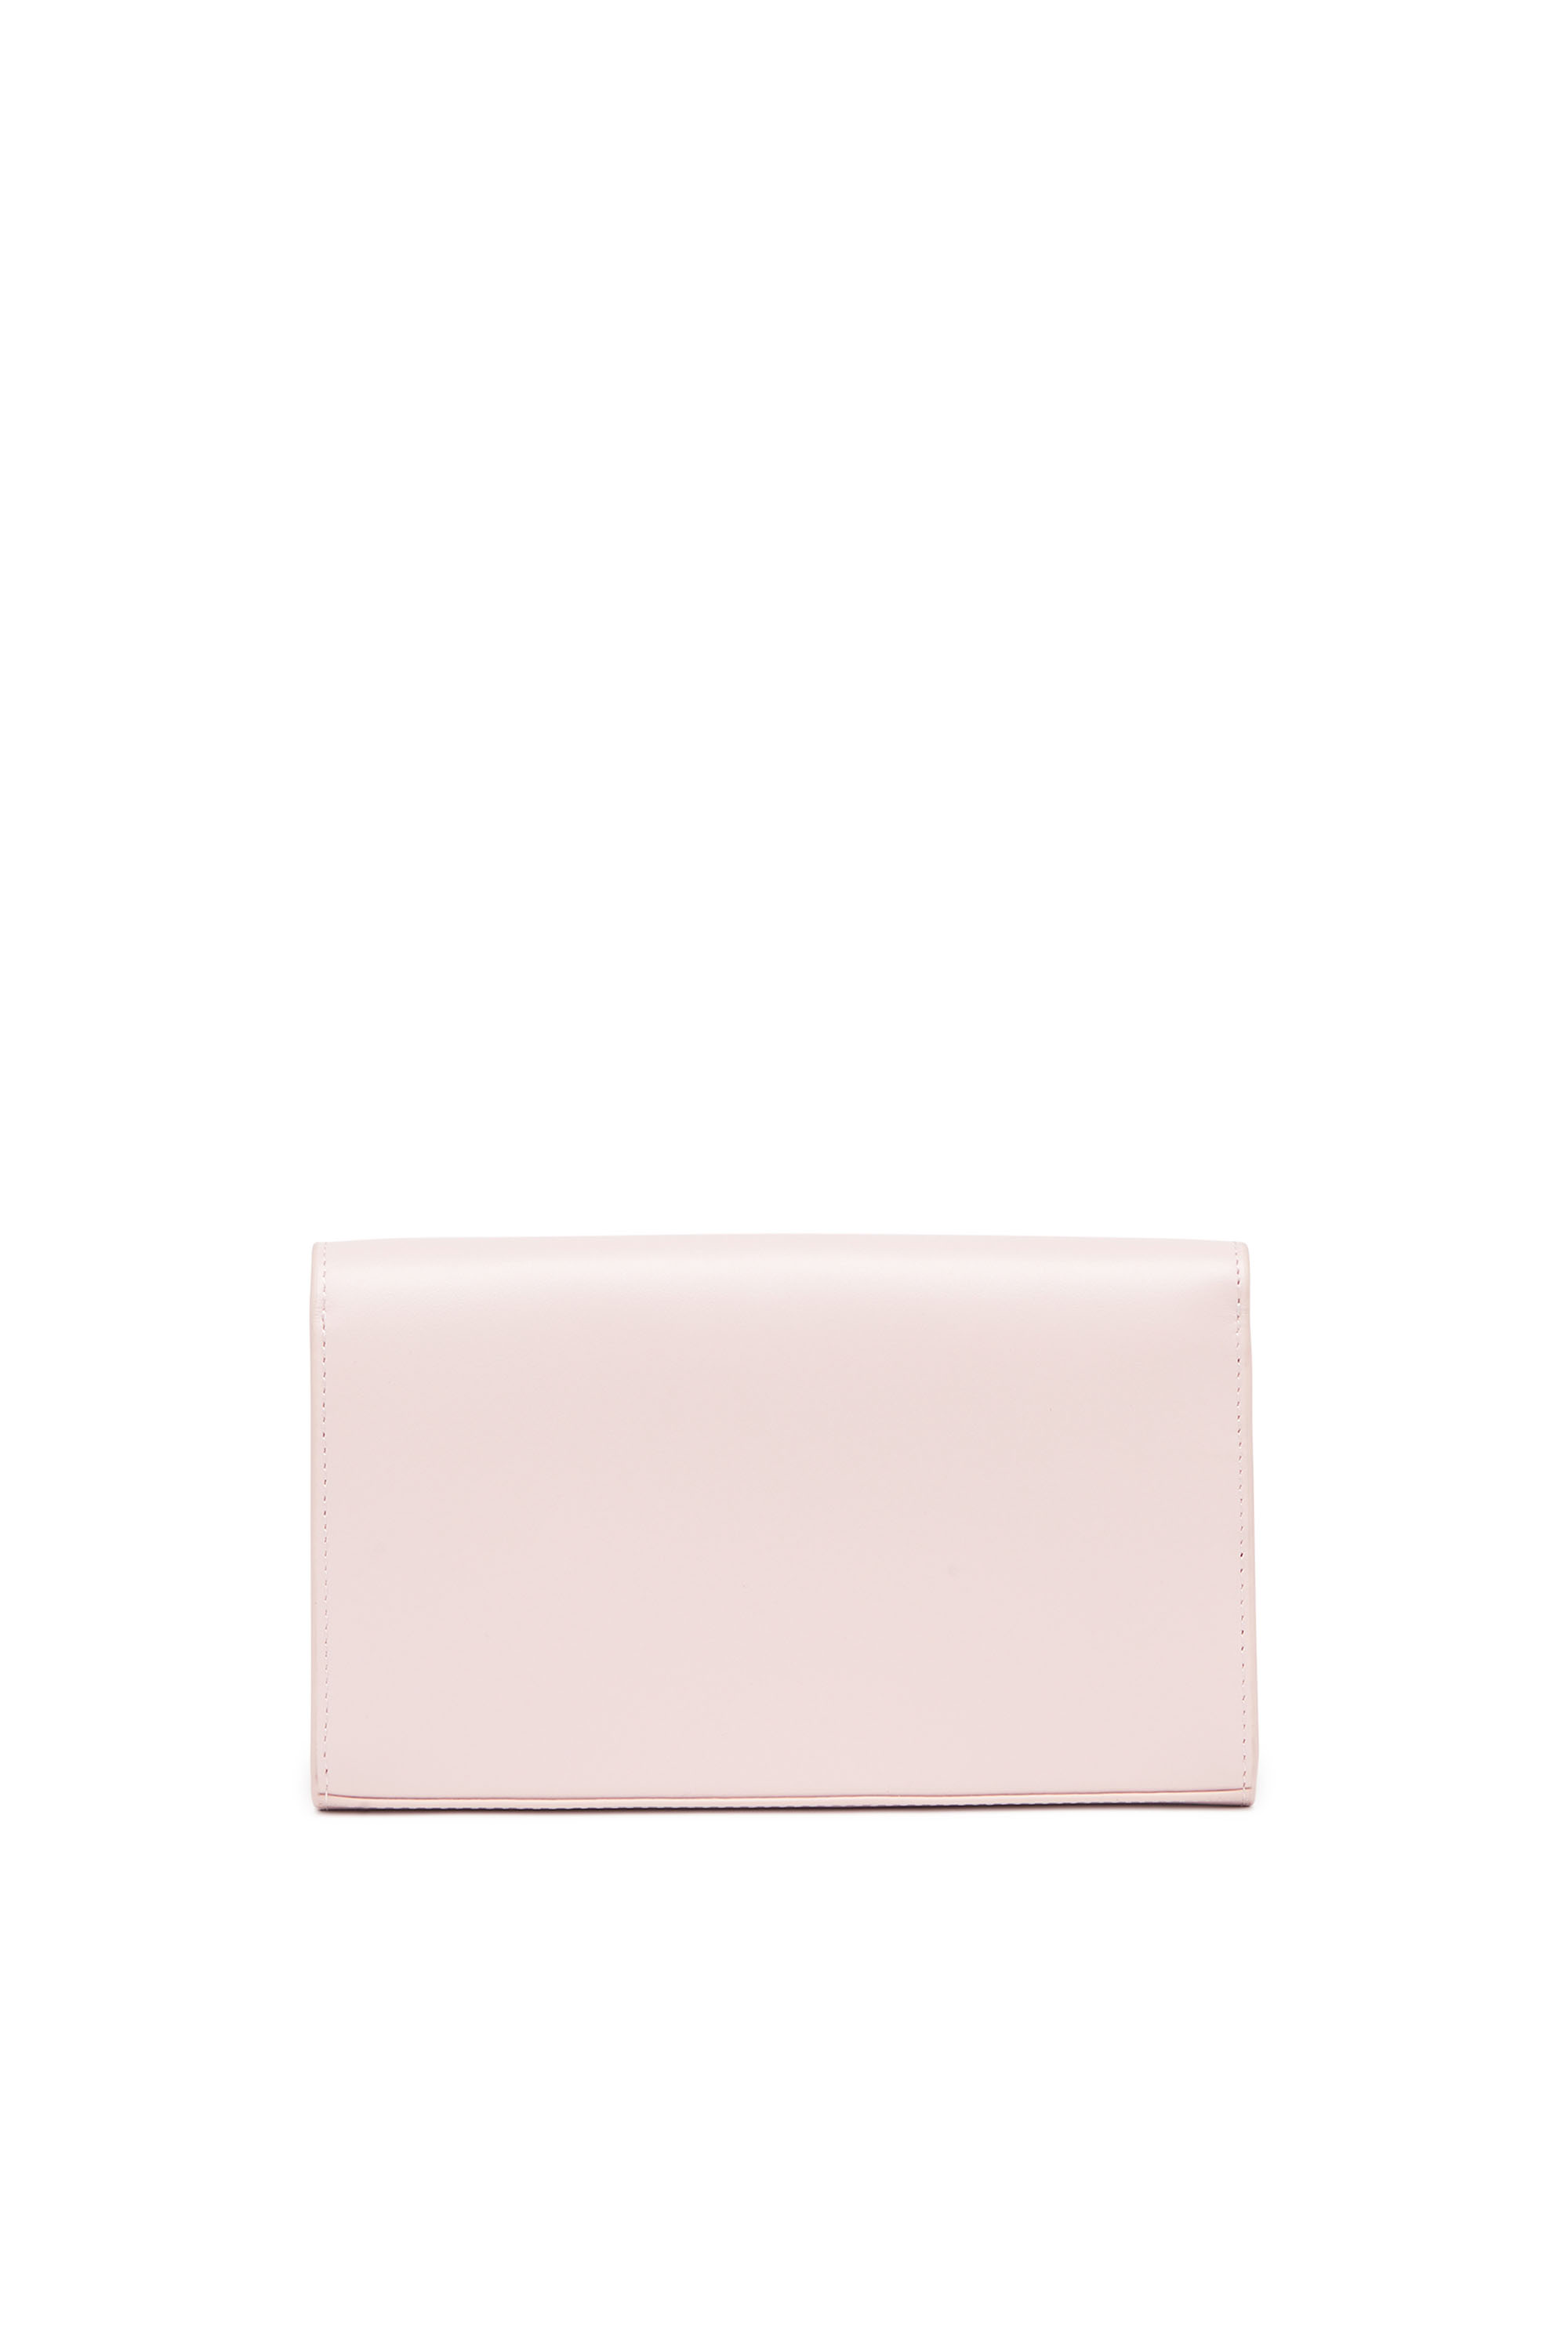 Diesel - 1DR WALLET STRAP, Woman Wallet purse in pastel leather in Pink - Image 2